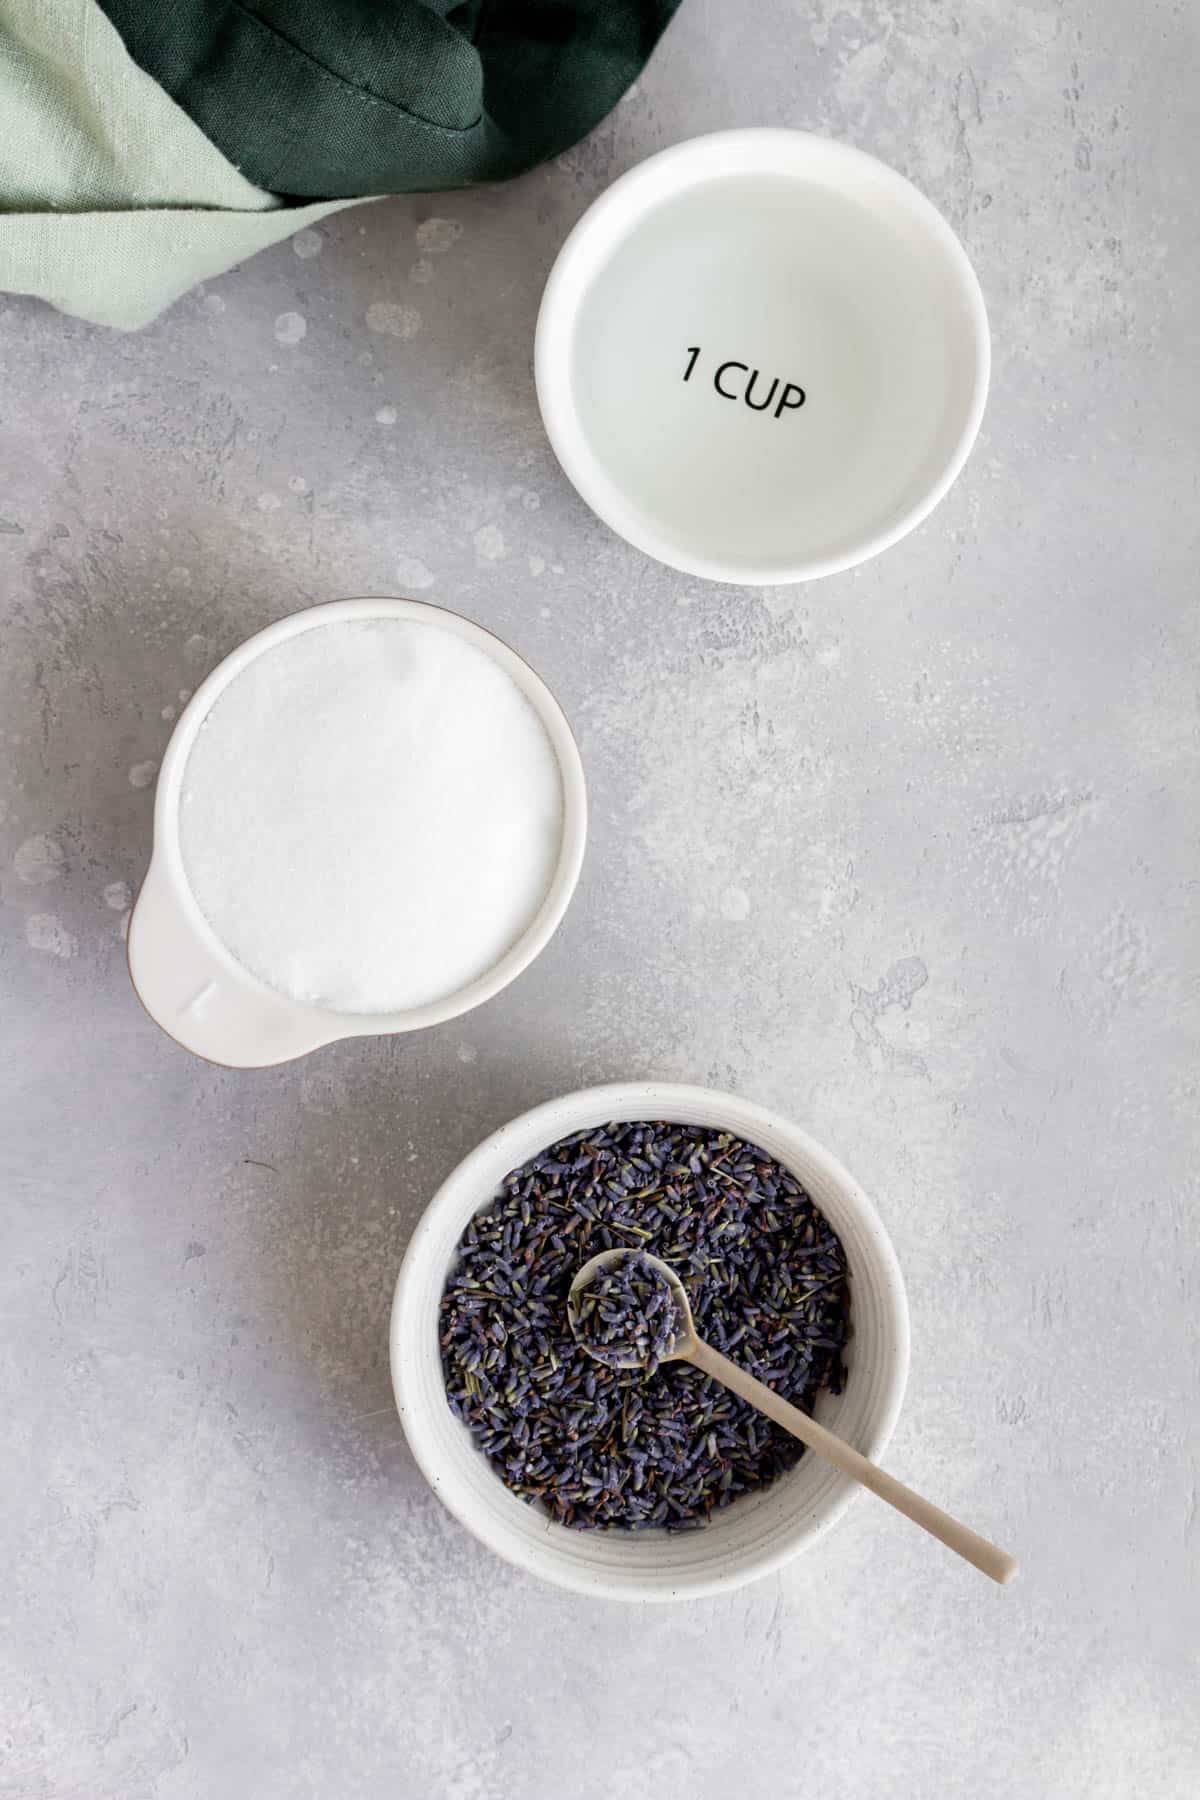 Ingredients needed to make lavender simple syrup.